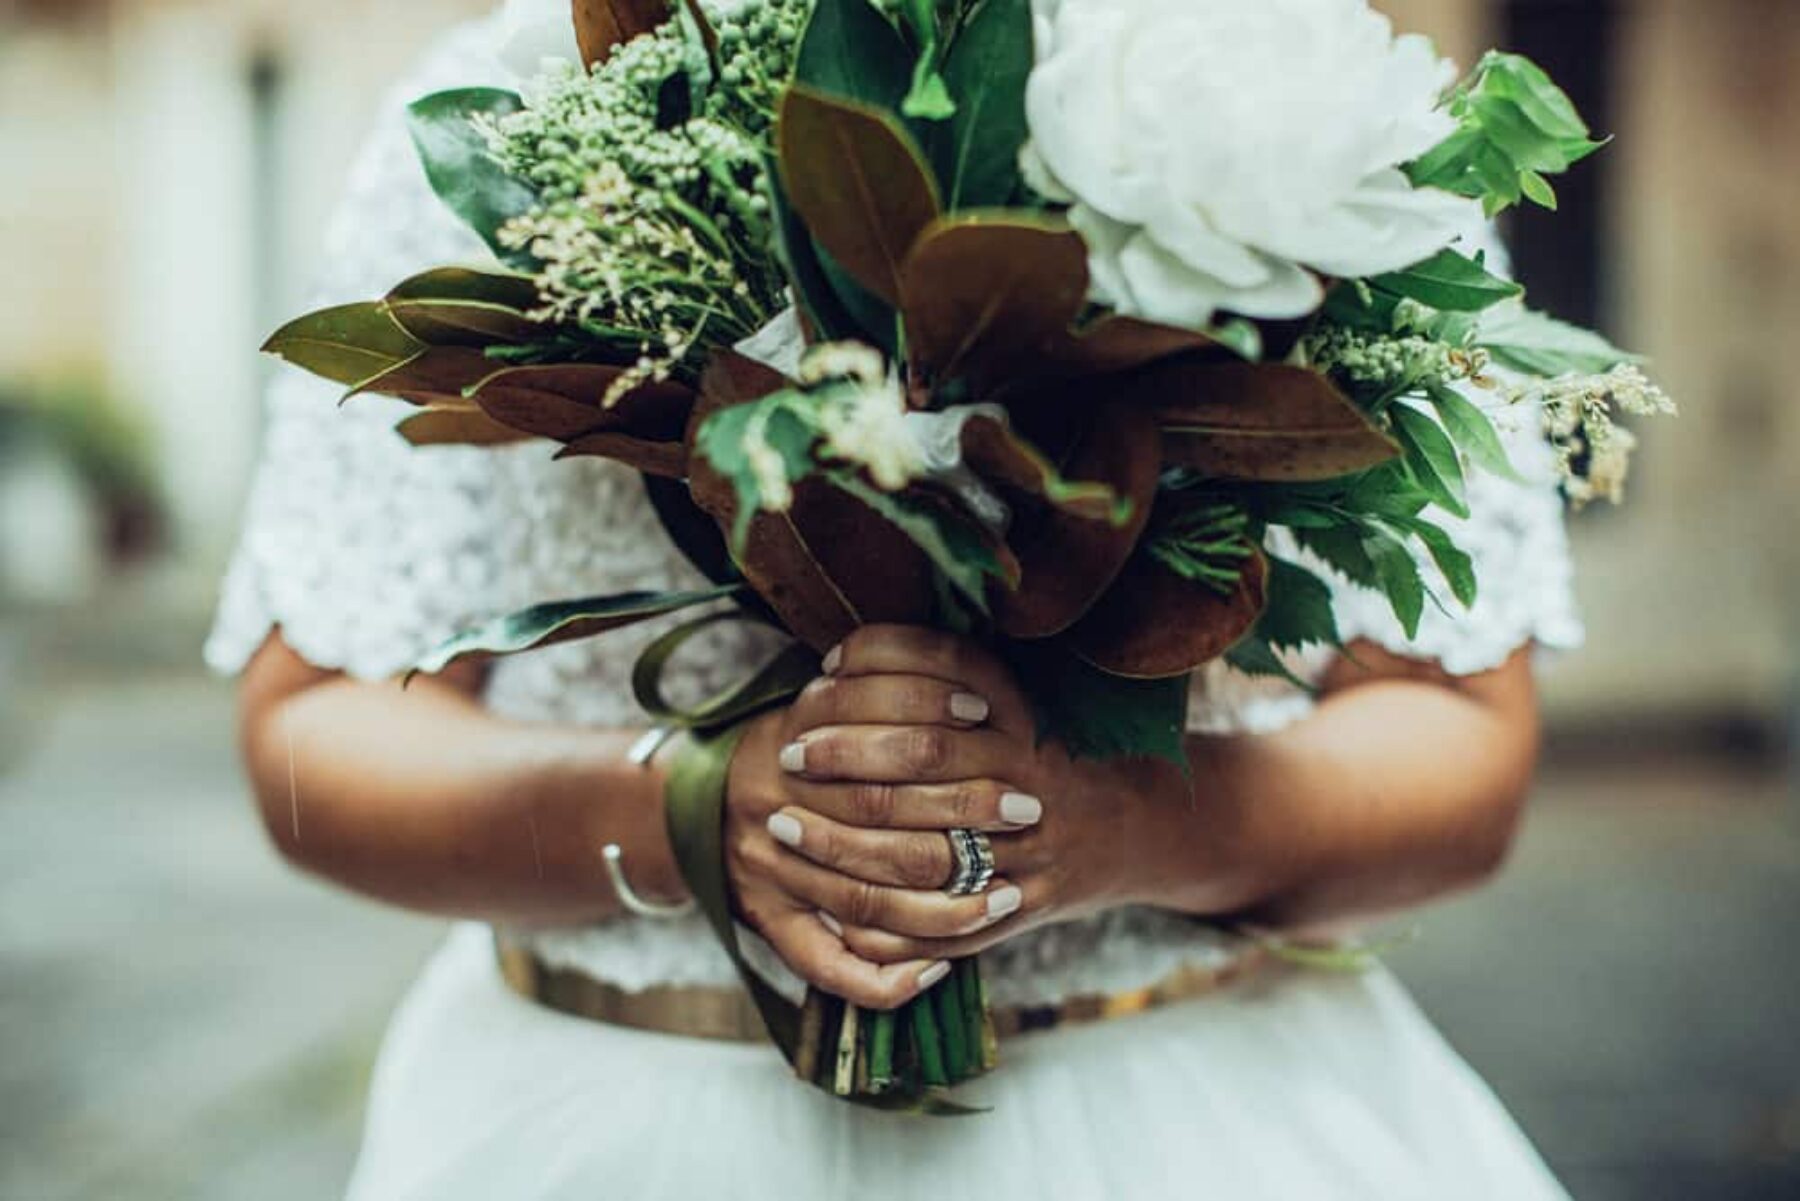 modern green and white wedding bouquet